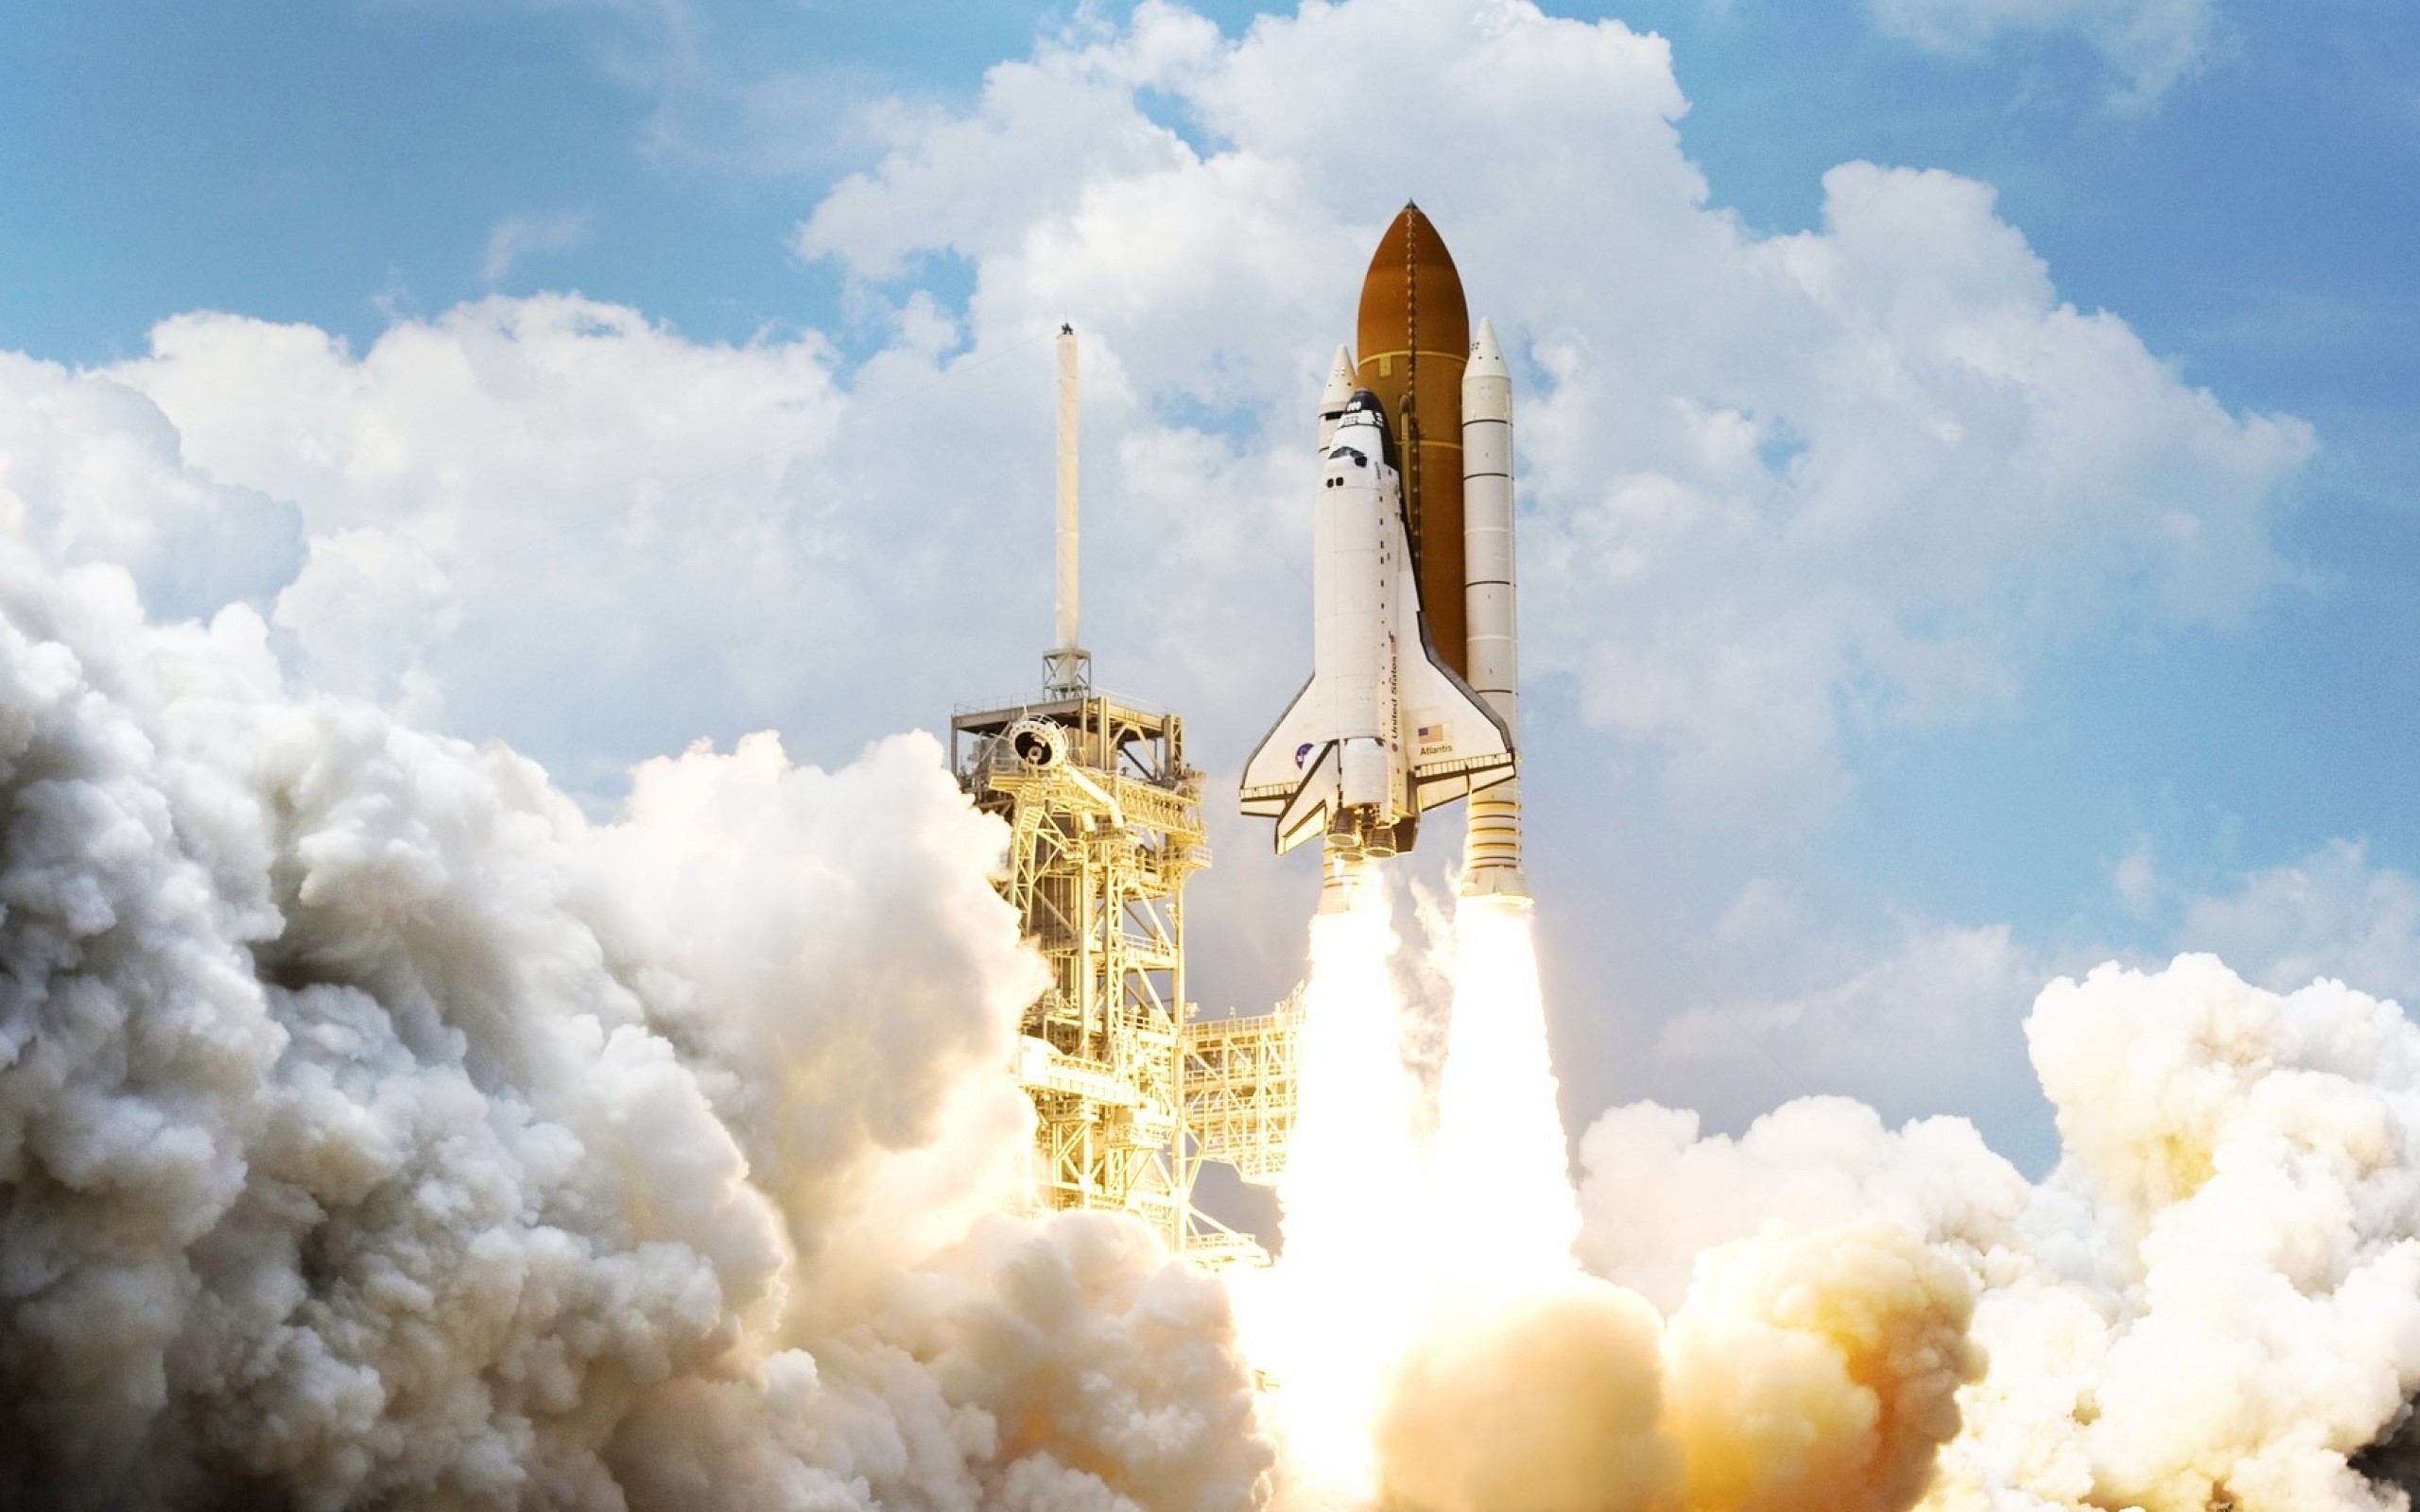 Nasa space shuttle info - hromamateur